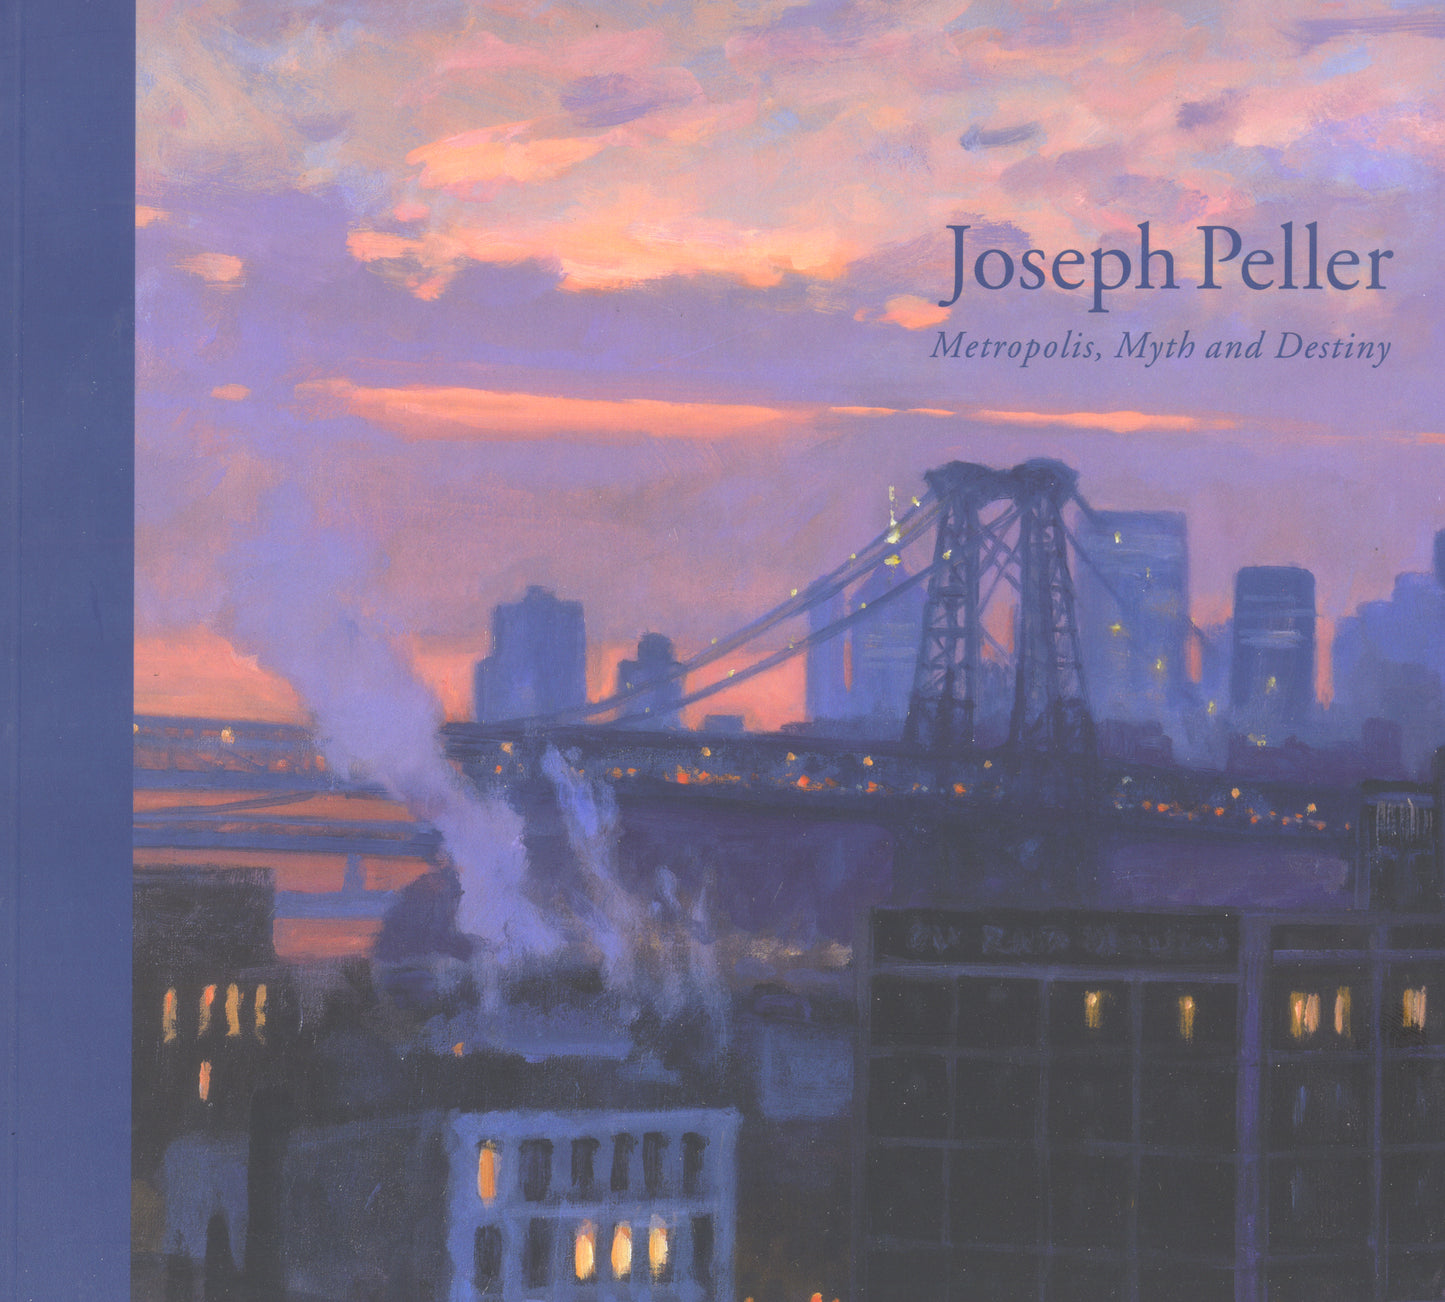 Joseph Peller: Metropolis, Myth and Destiny